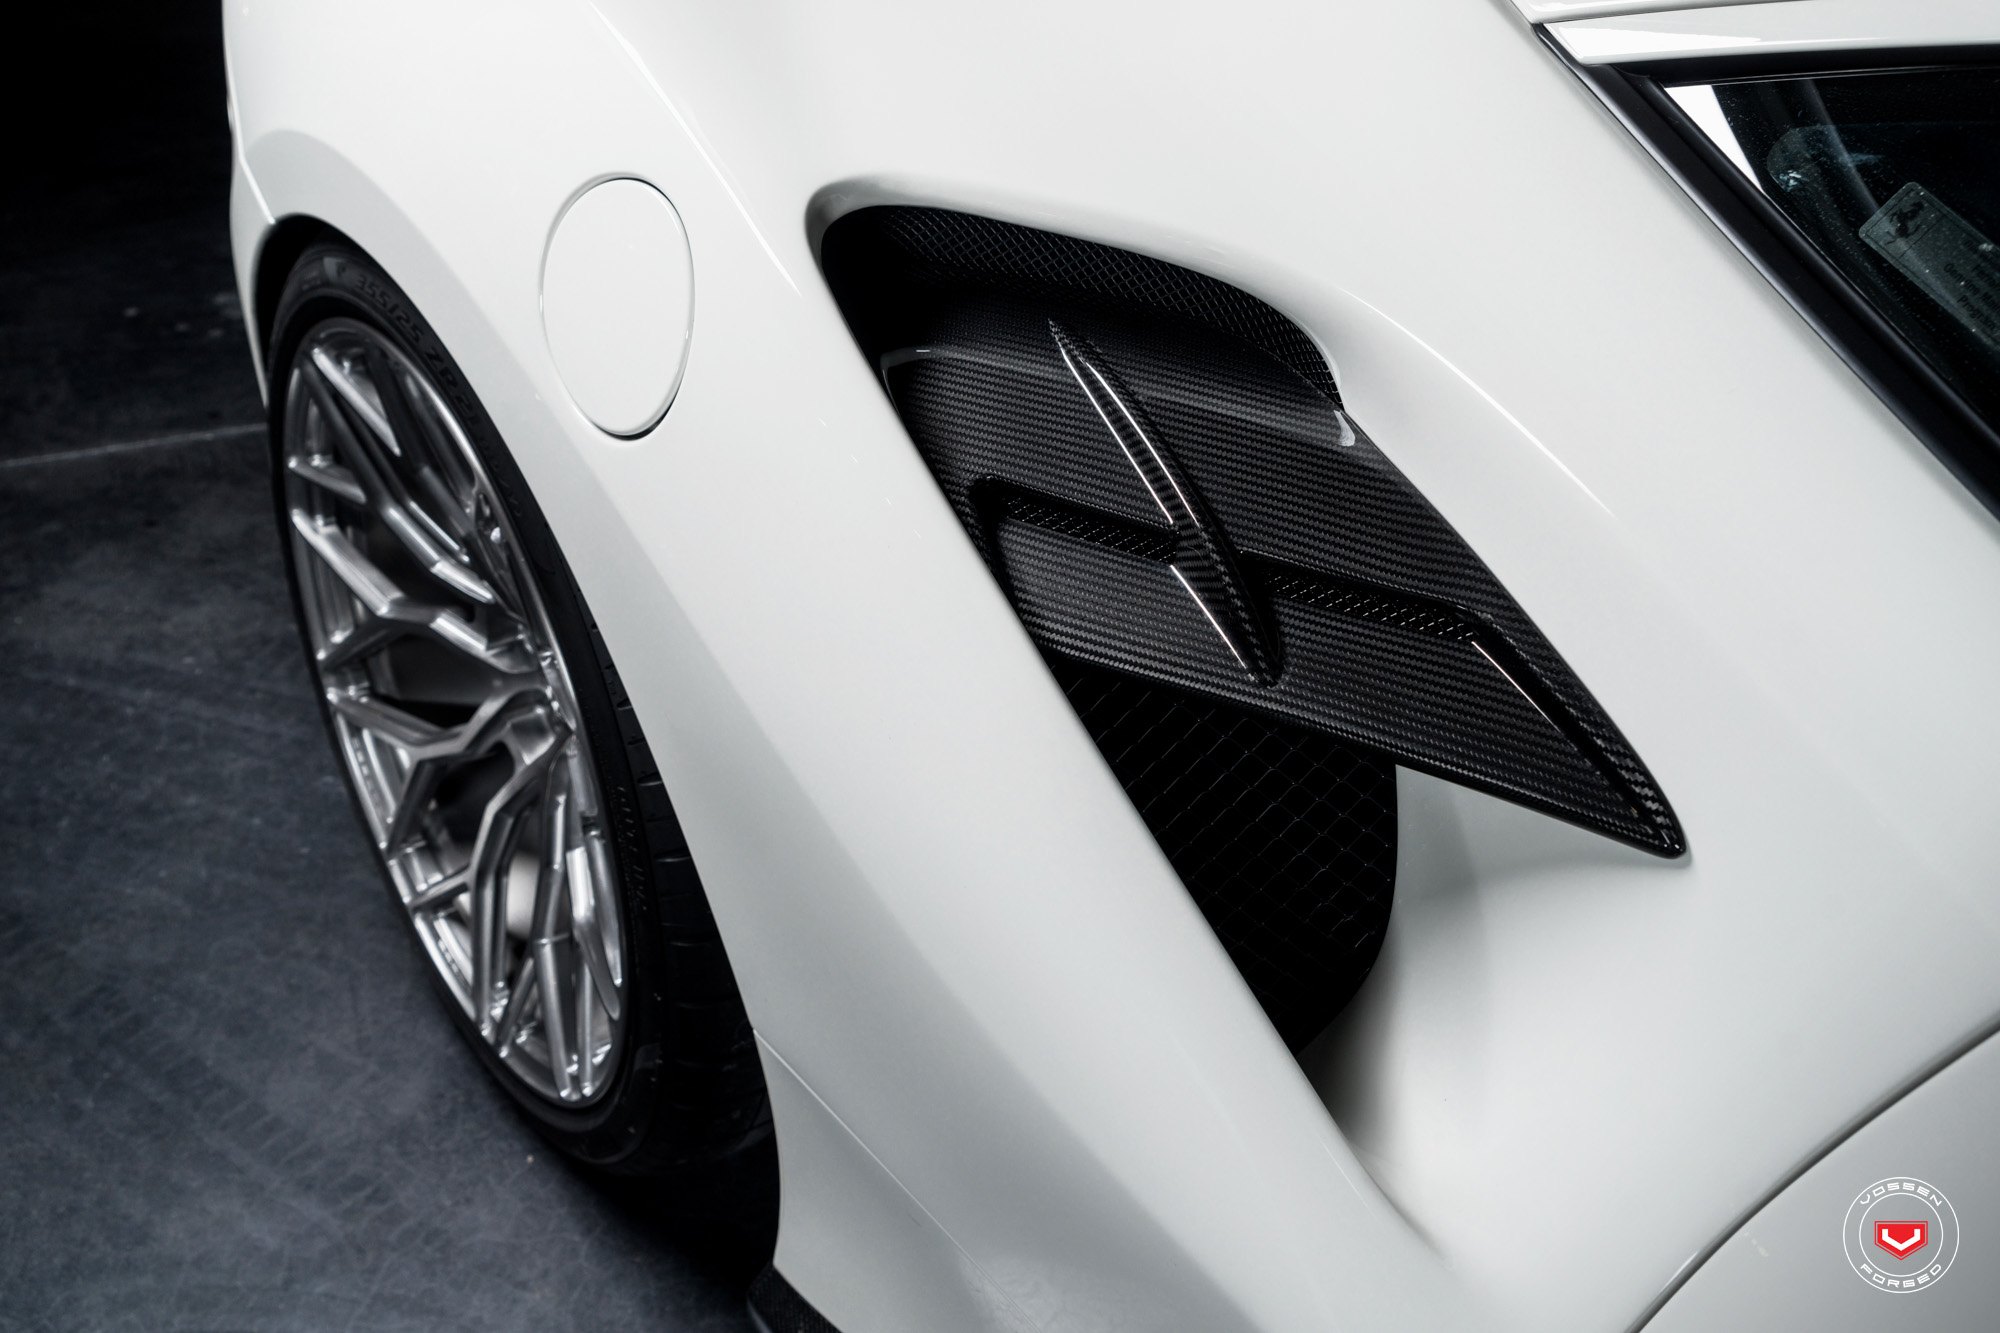 Carbon Fiber Side Scoops on White Ferrari 488 - Photo by Vossen